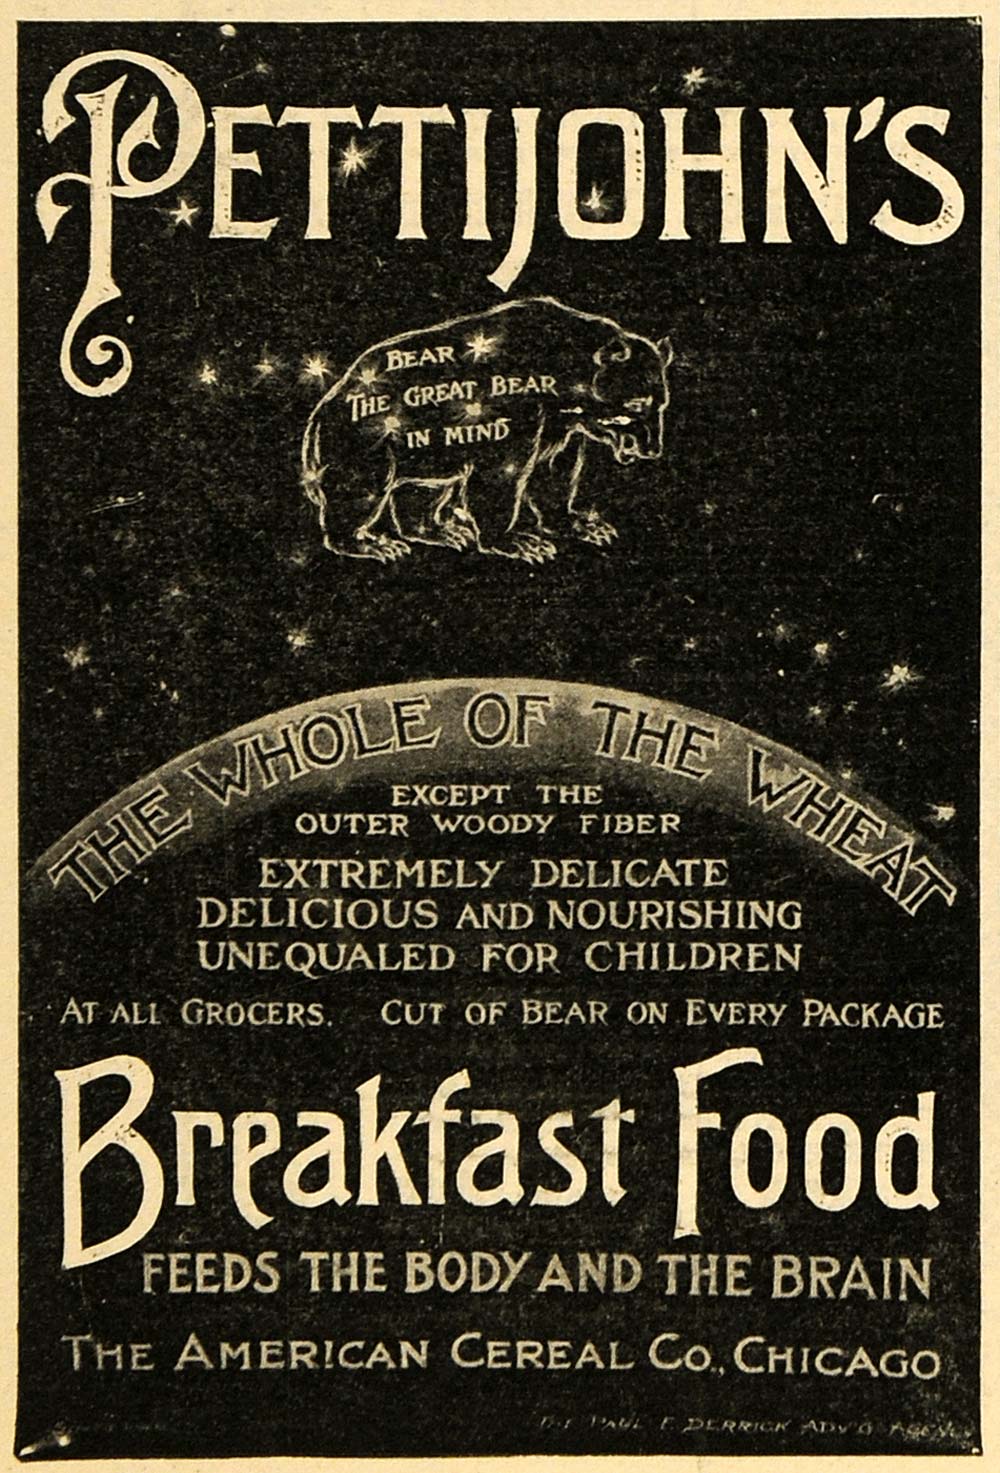 1898 Ad Pettijohns Bear Constellation American Cereal - ORIGINAL TOM3